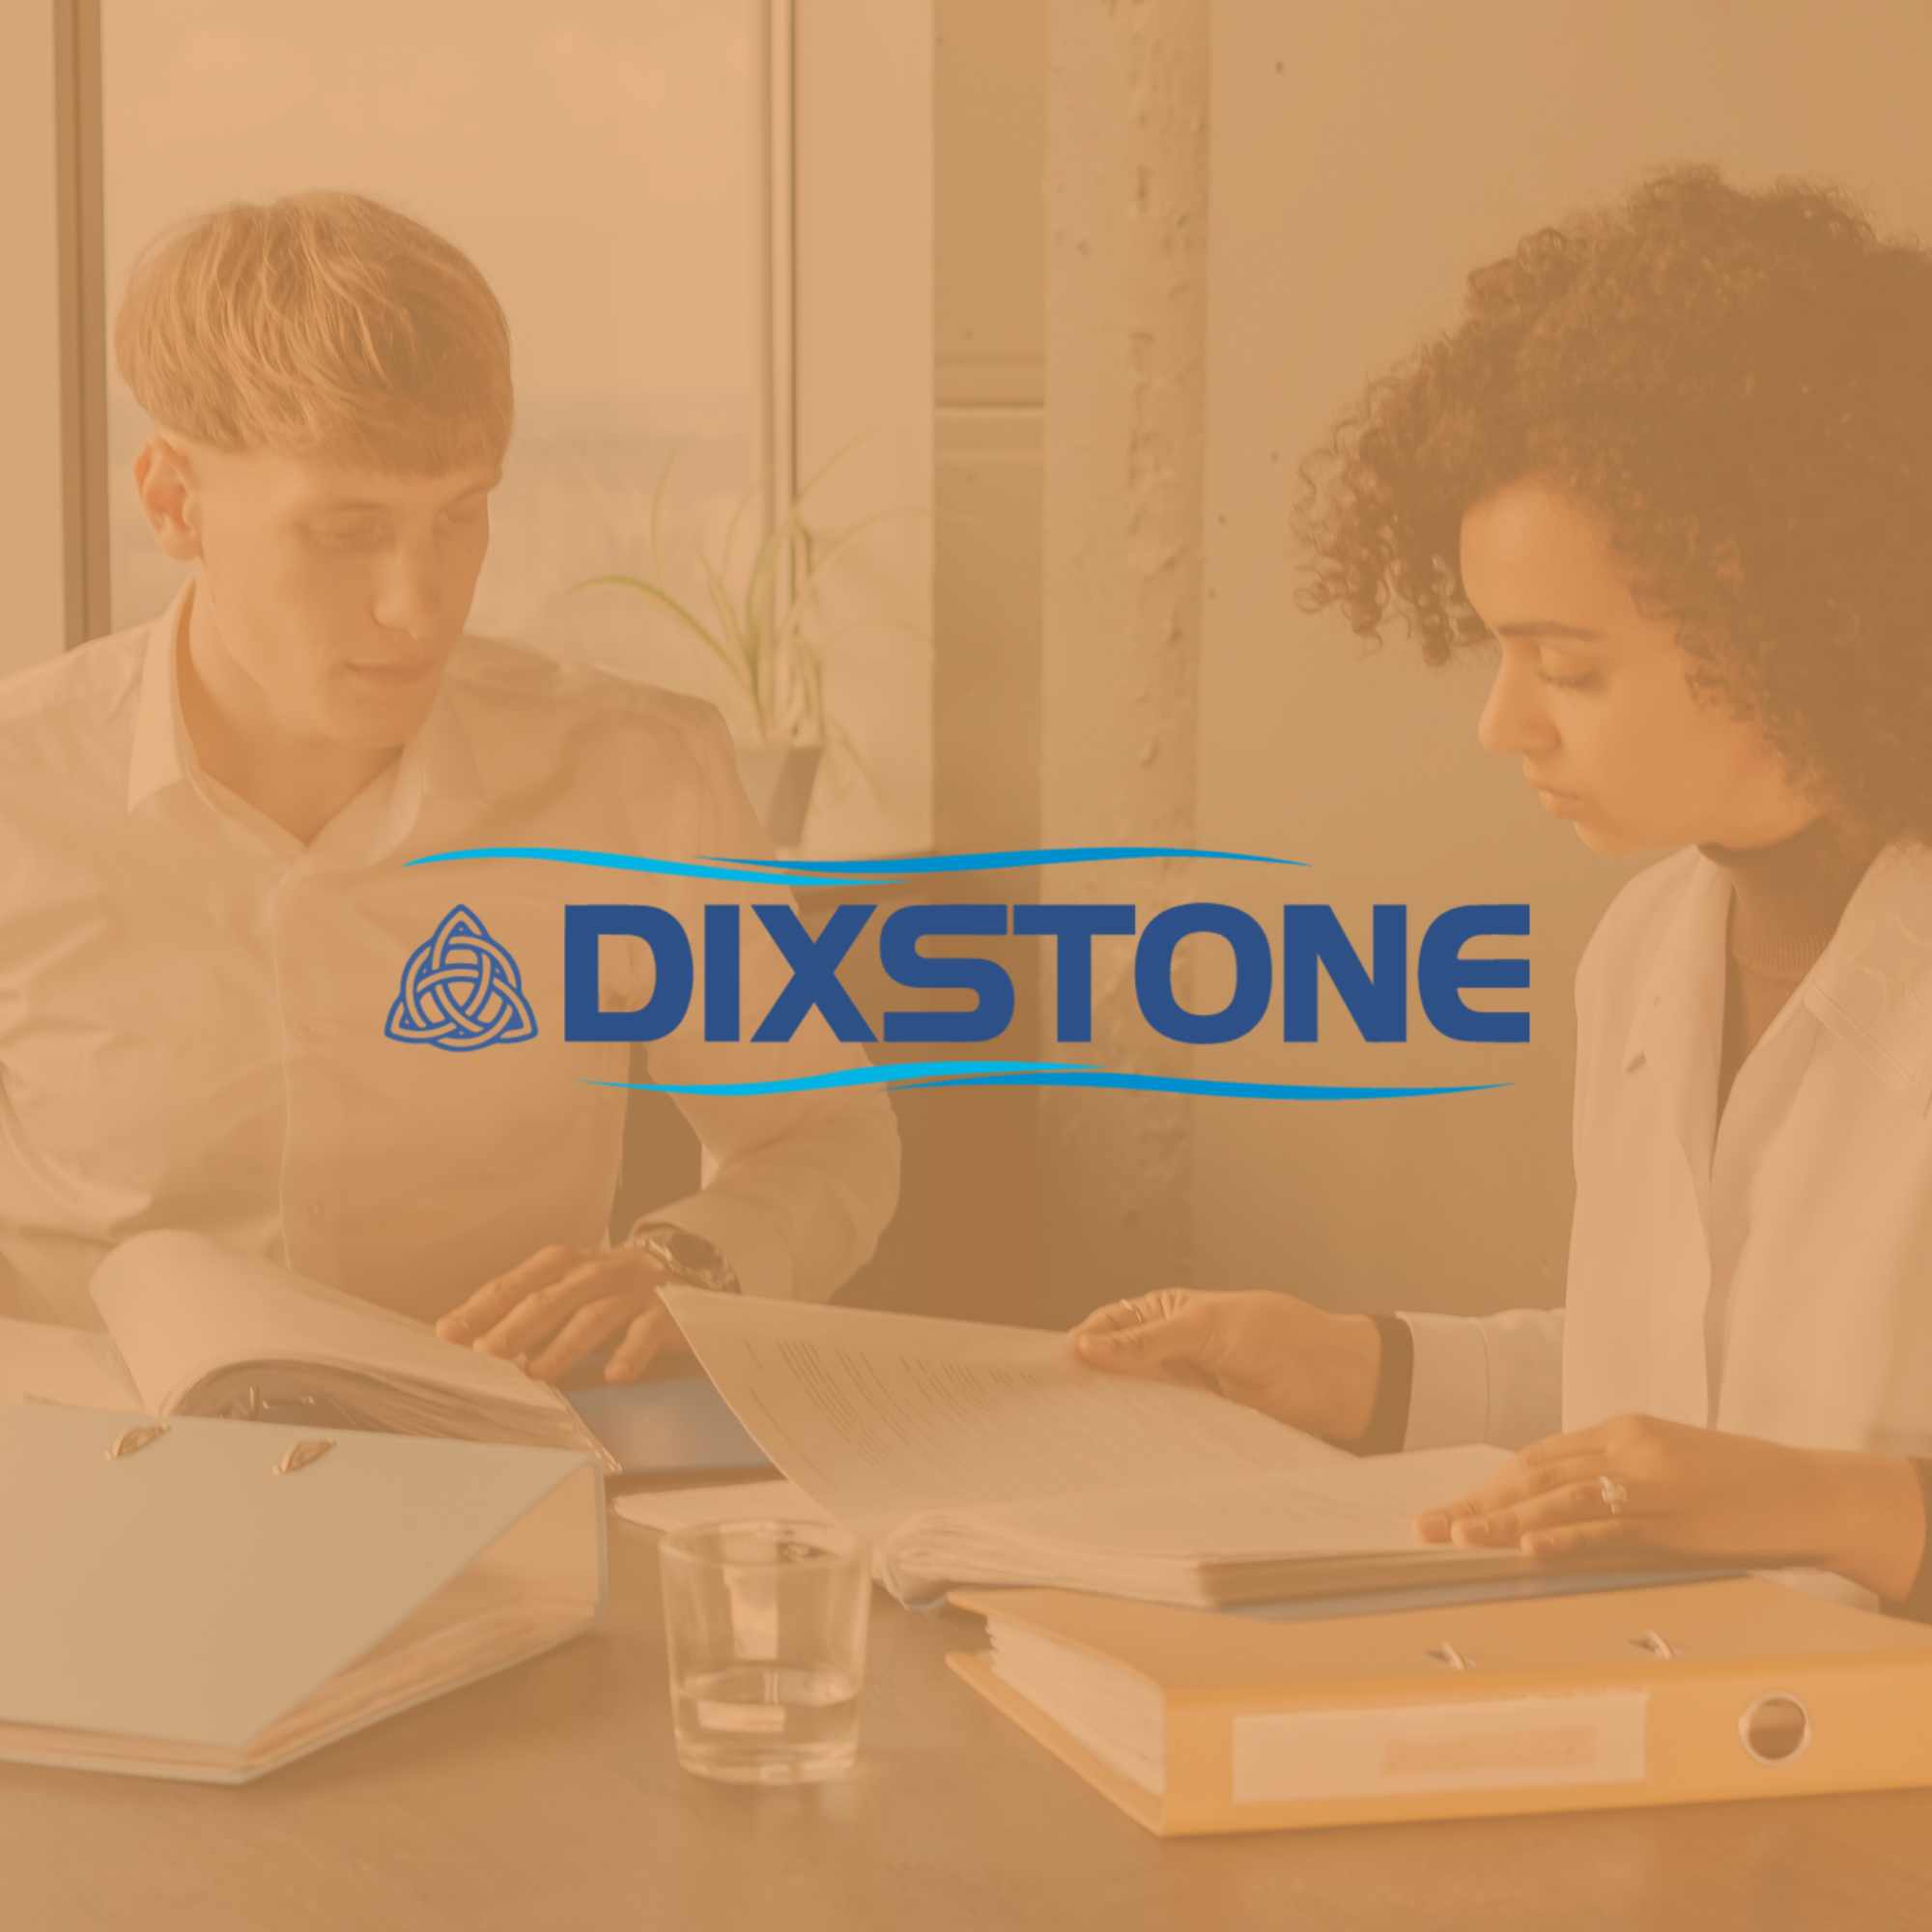 Dixstone automates invoice processing with generative AI